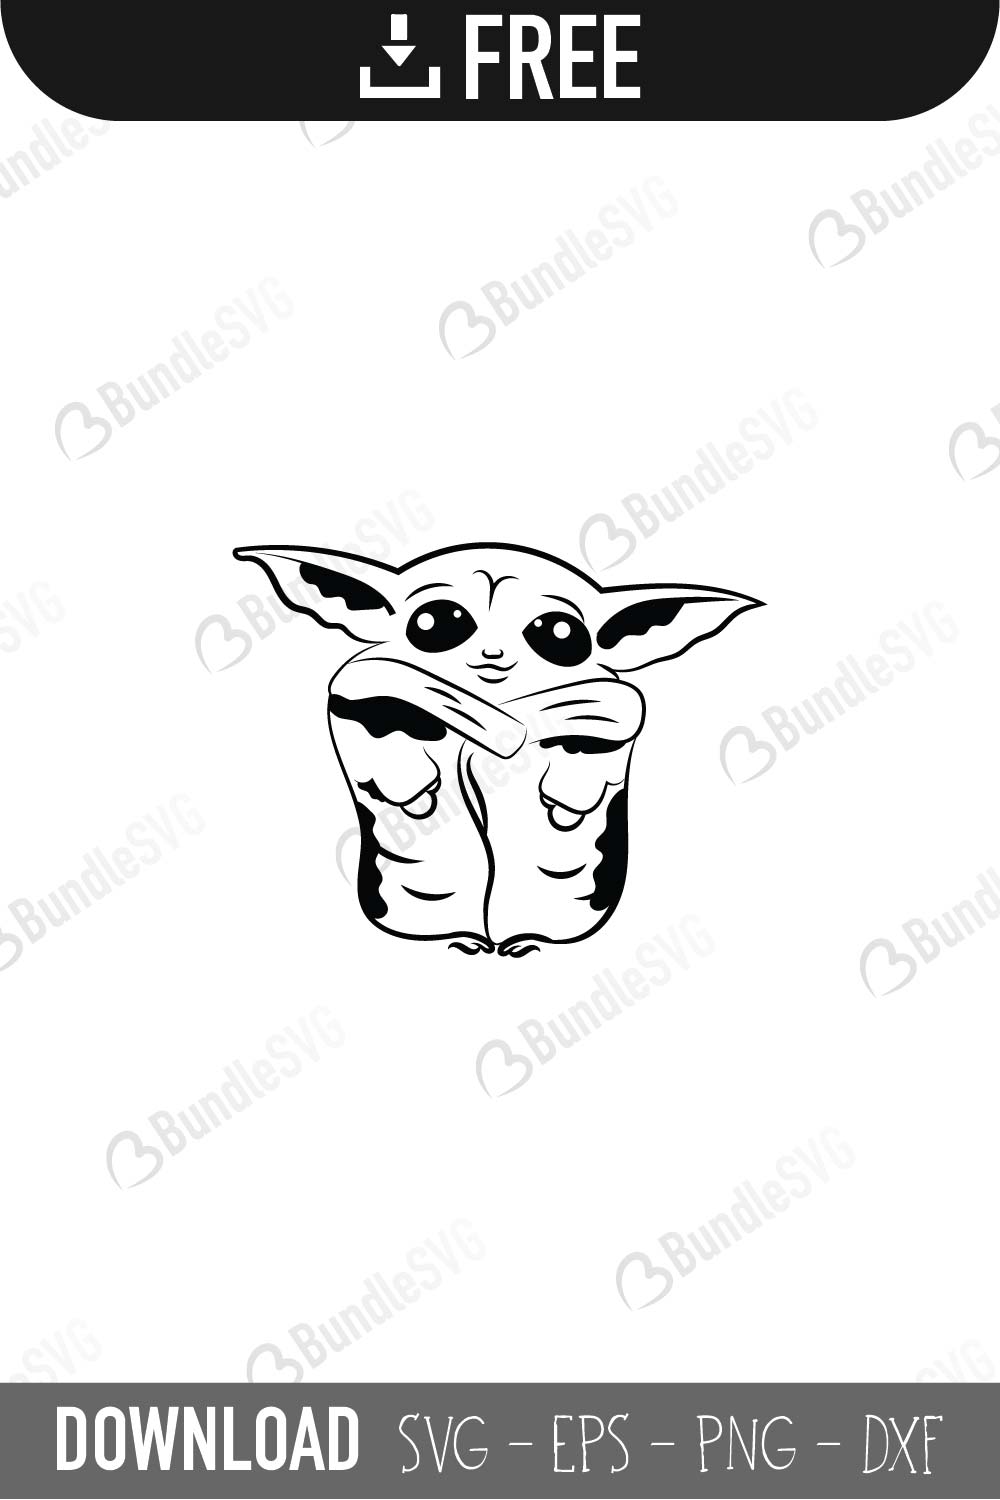 Baby Yoda SVG Cut Files | BundleSVG